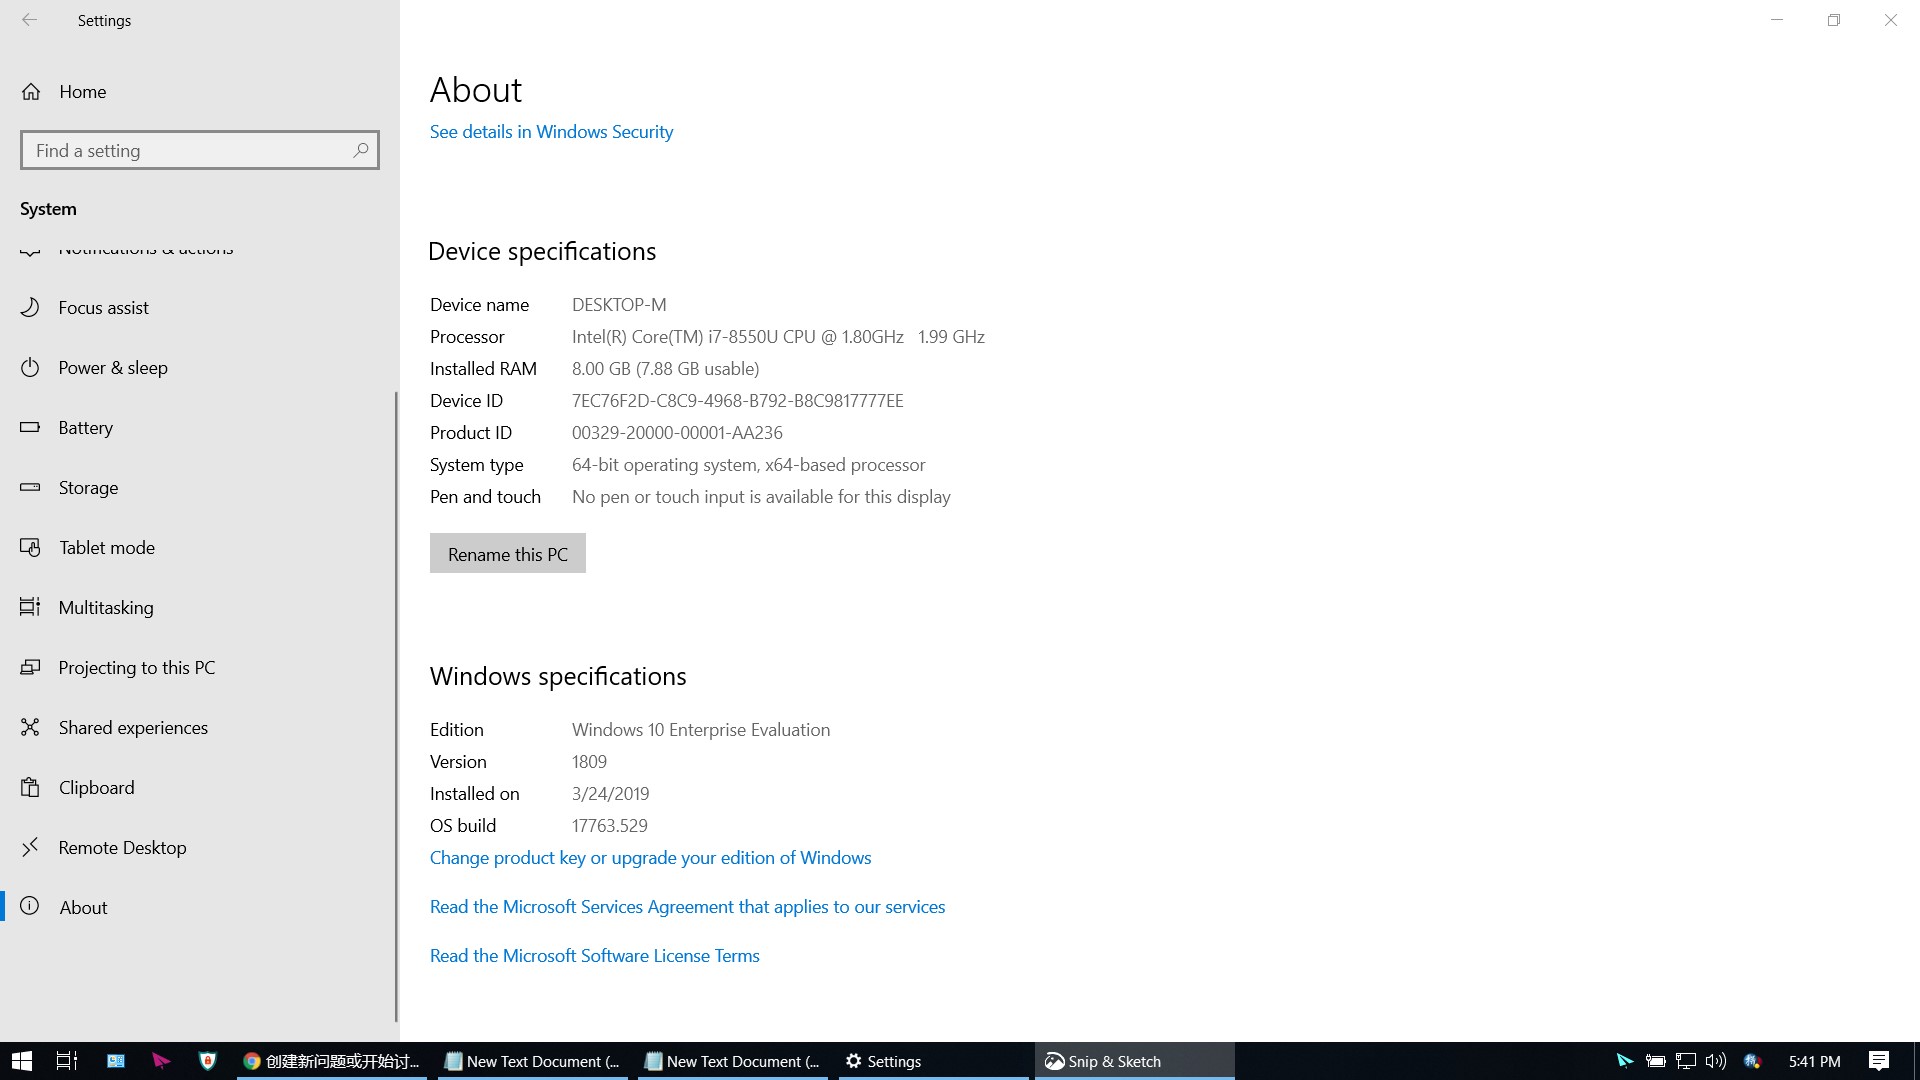 Windows 10 Enterprise Evaluation Edition 1809 upgrade to 1903 , unable to reserved user data. b11e6968-1639-467b-8ec7-f5f63406c6c1?upload=true.jpg